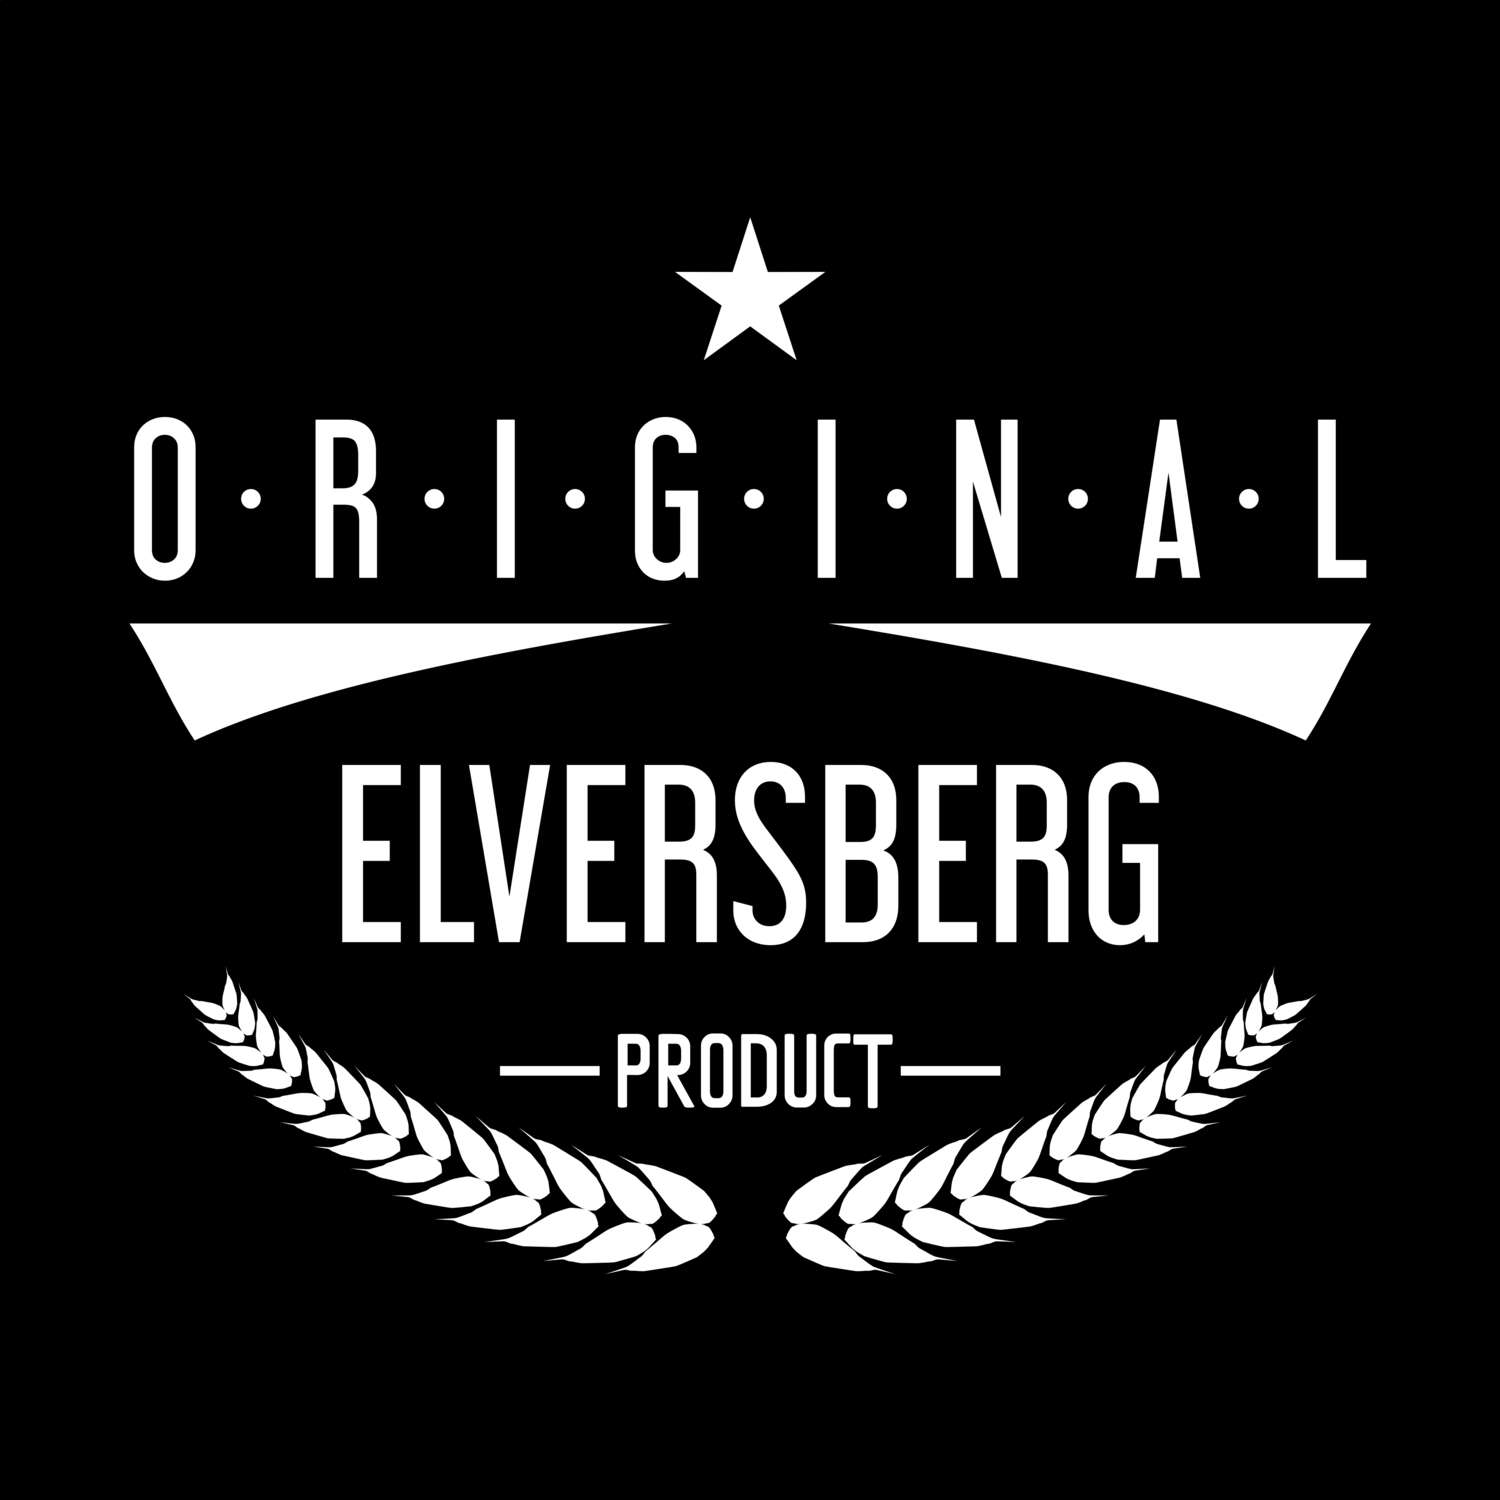 Elversberg T-Shirt »Original Product«